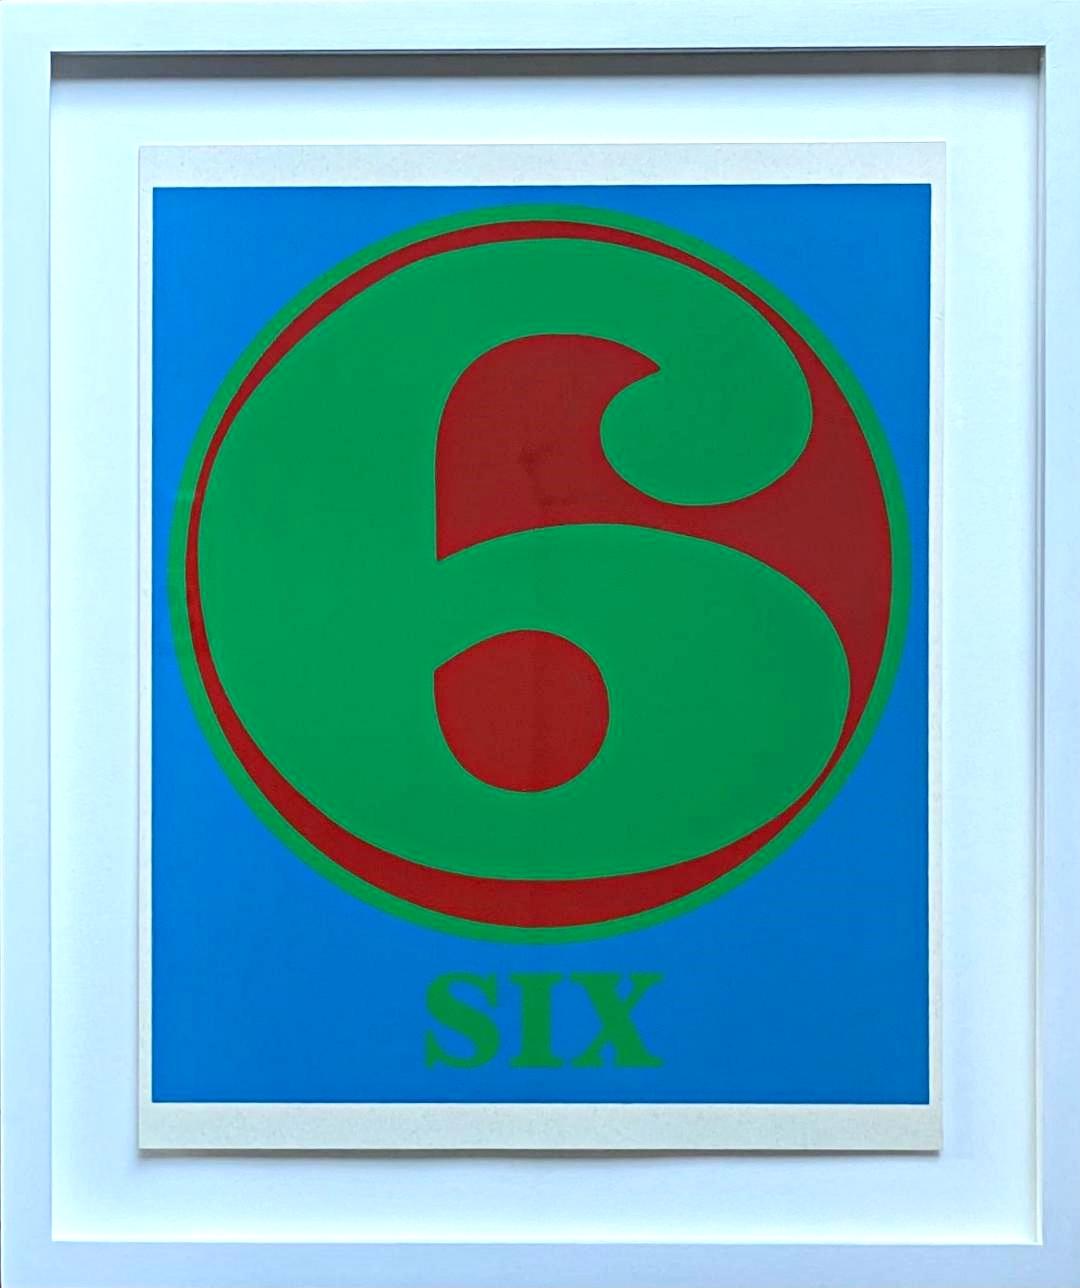 Abstract Print Robert Indiana - 6 (Six), provenant du portfolio original Numbers (Sheehan 46-55)